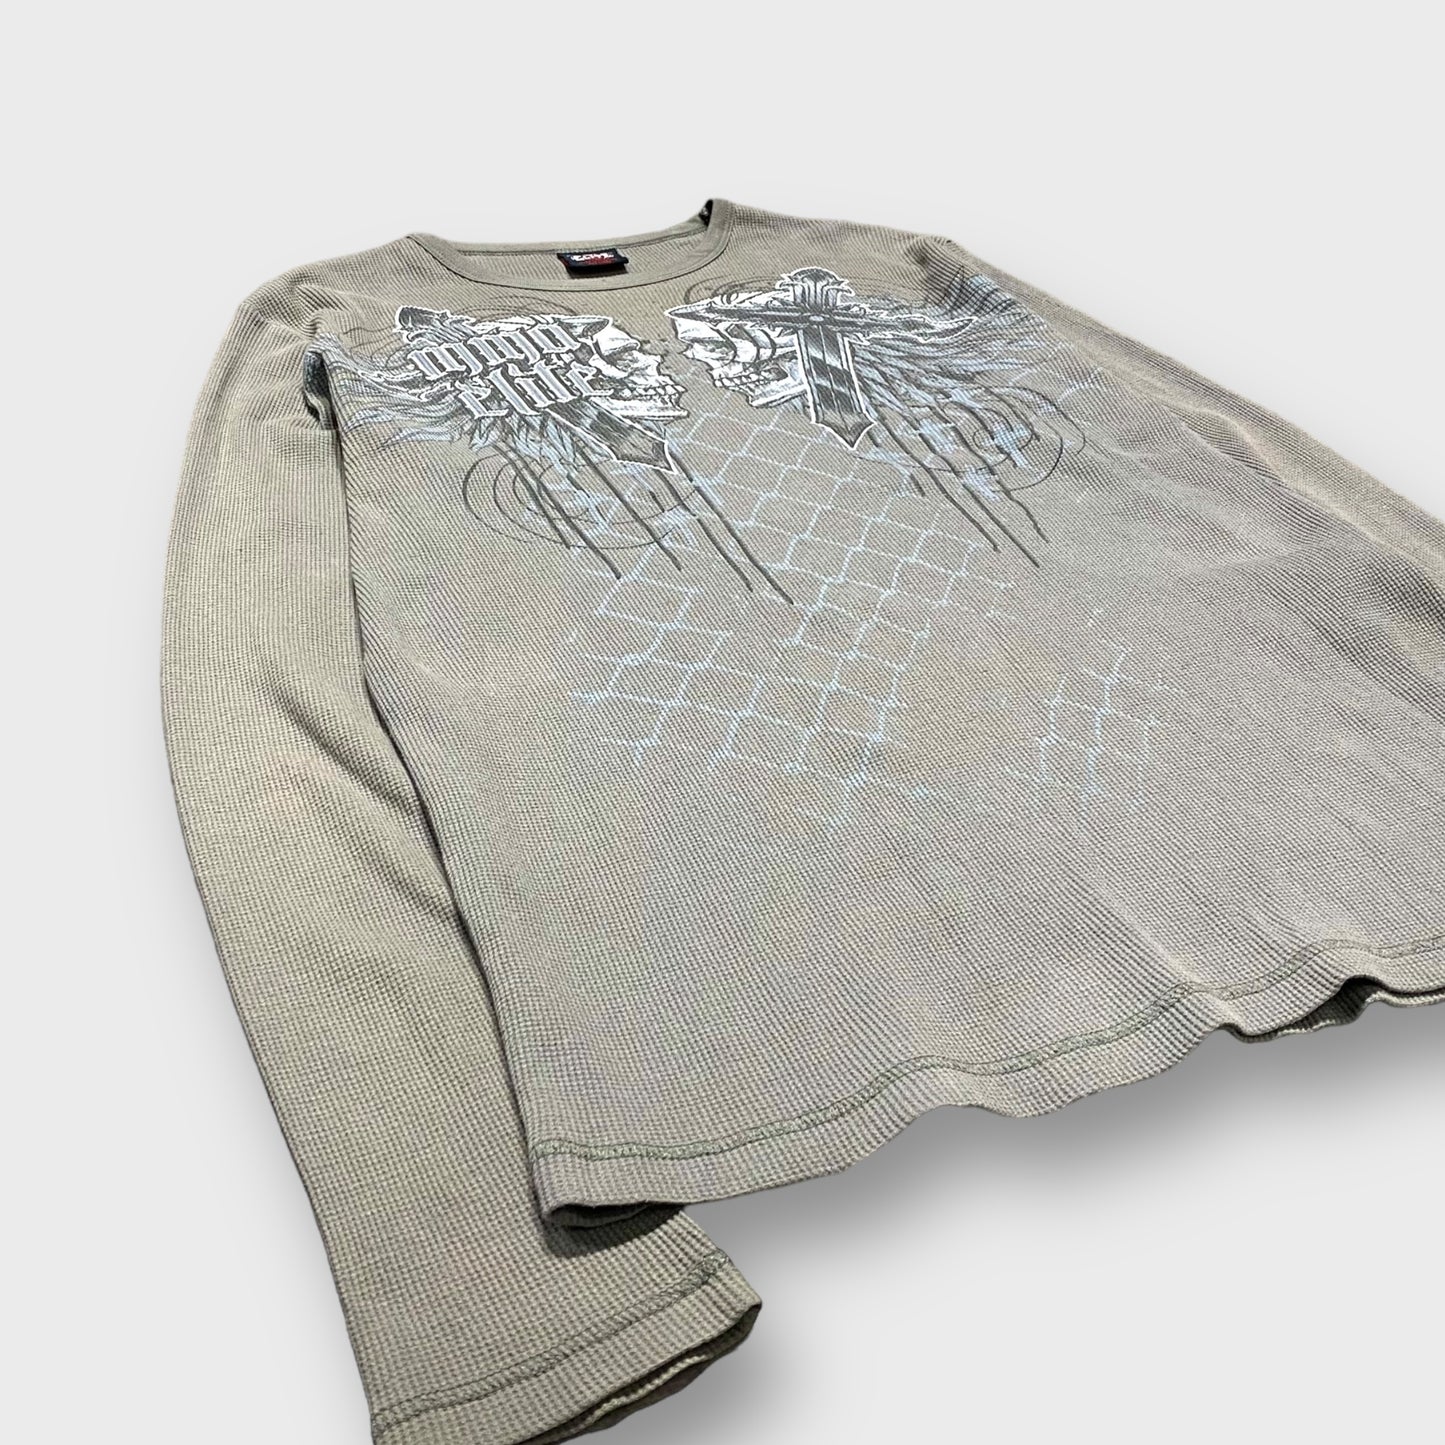 "MMA ELITE" Indian skull design thermal knit sweater